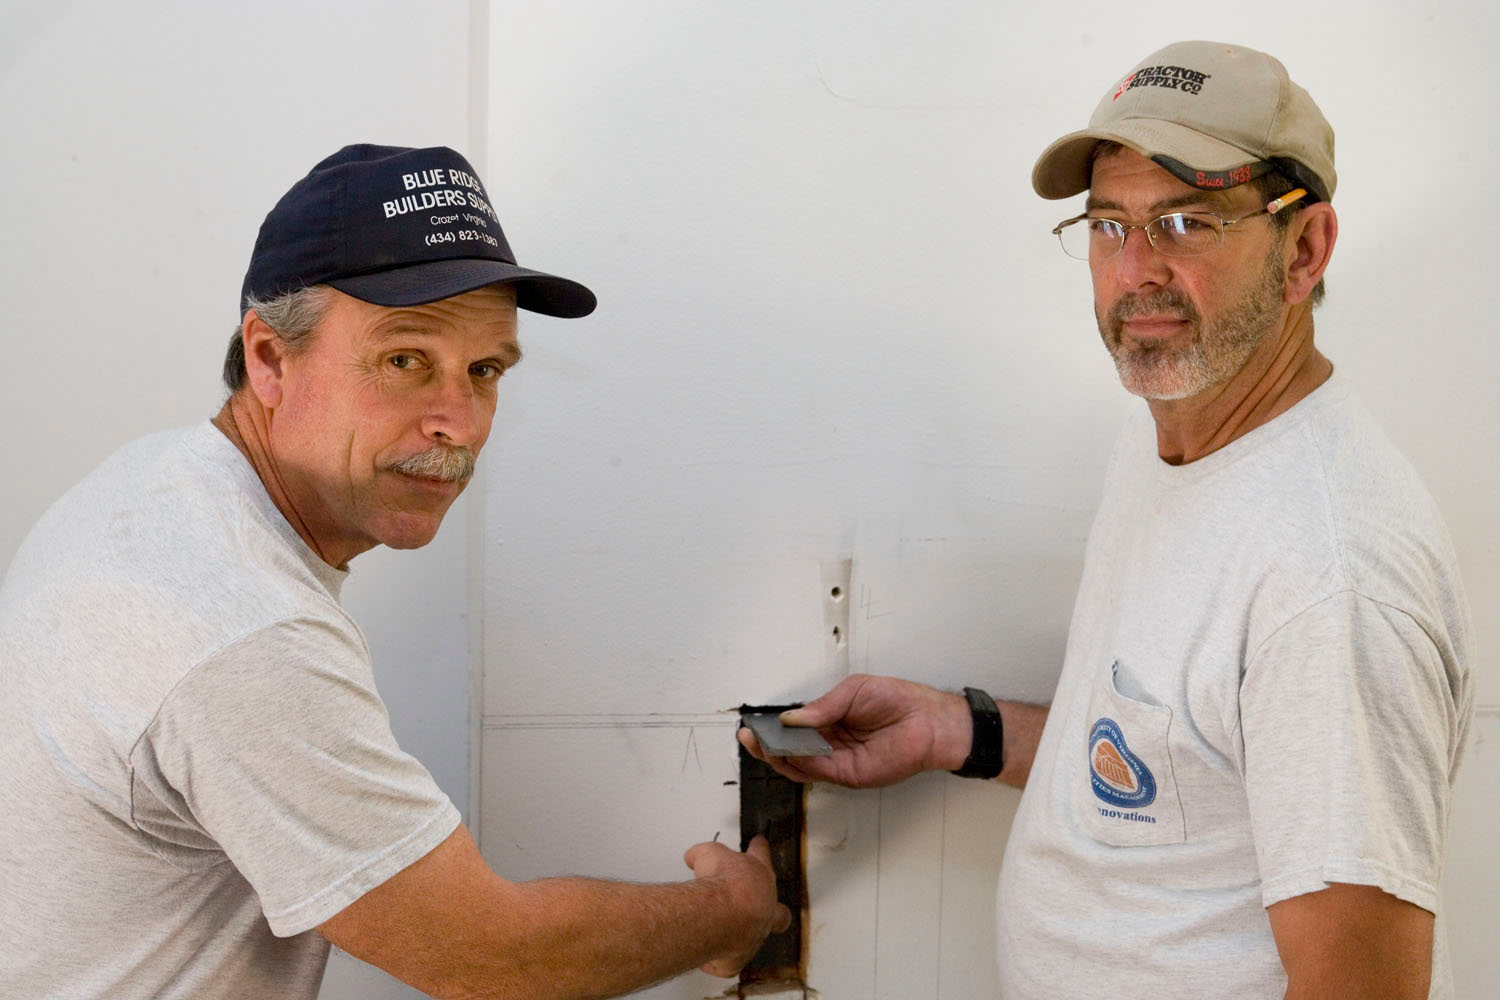 Greg Bugg and Linwood Marshall work together to repair a wall